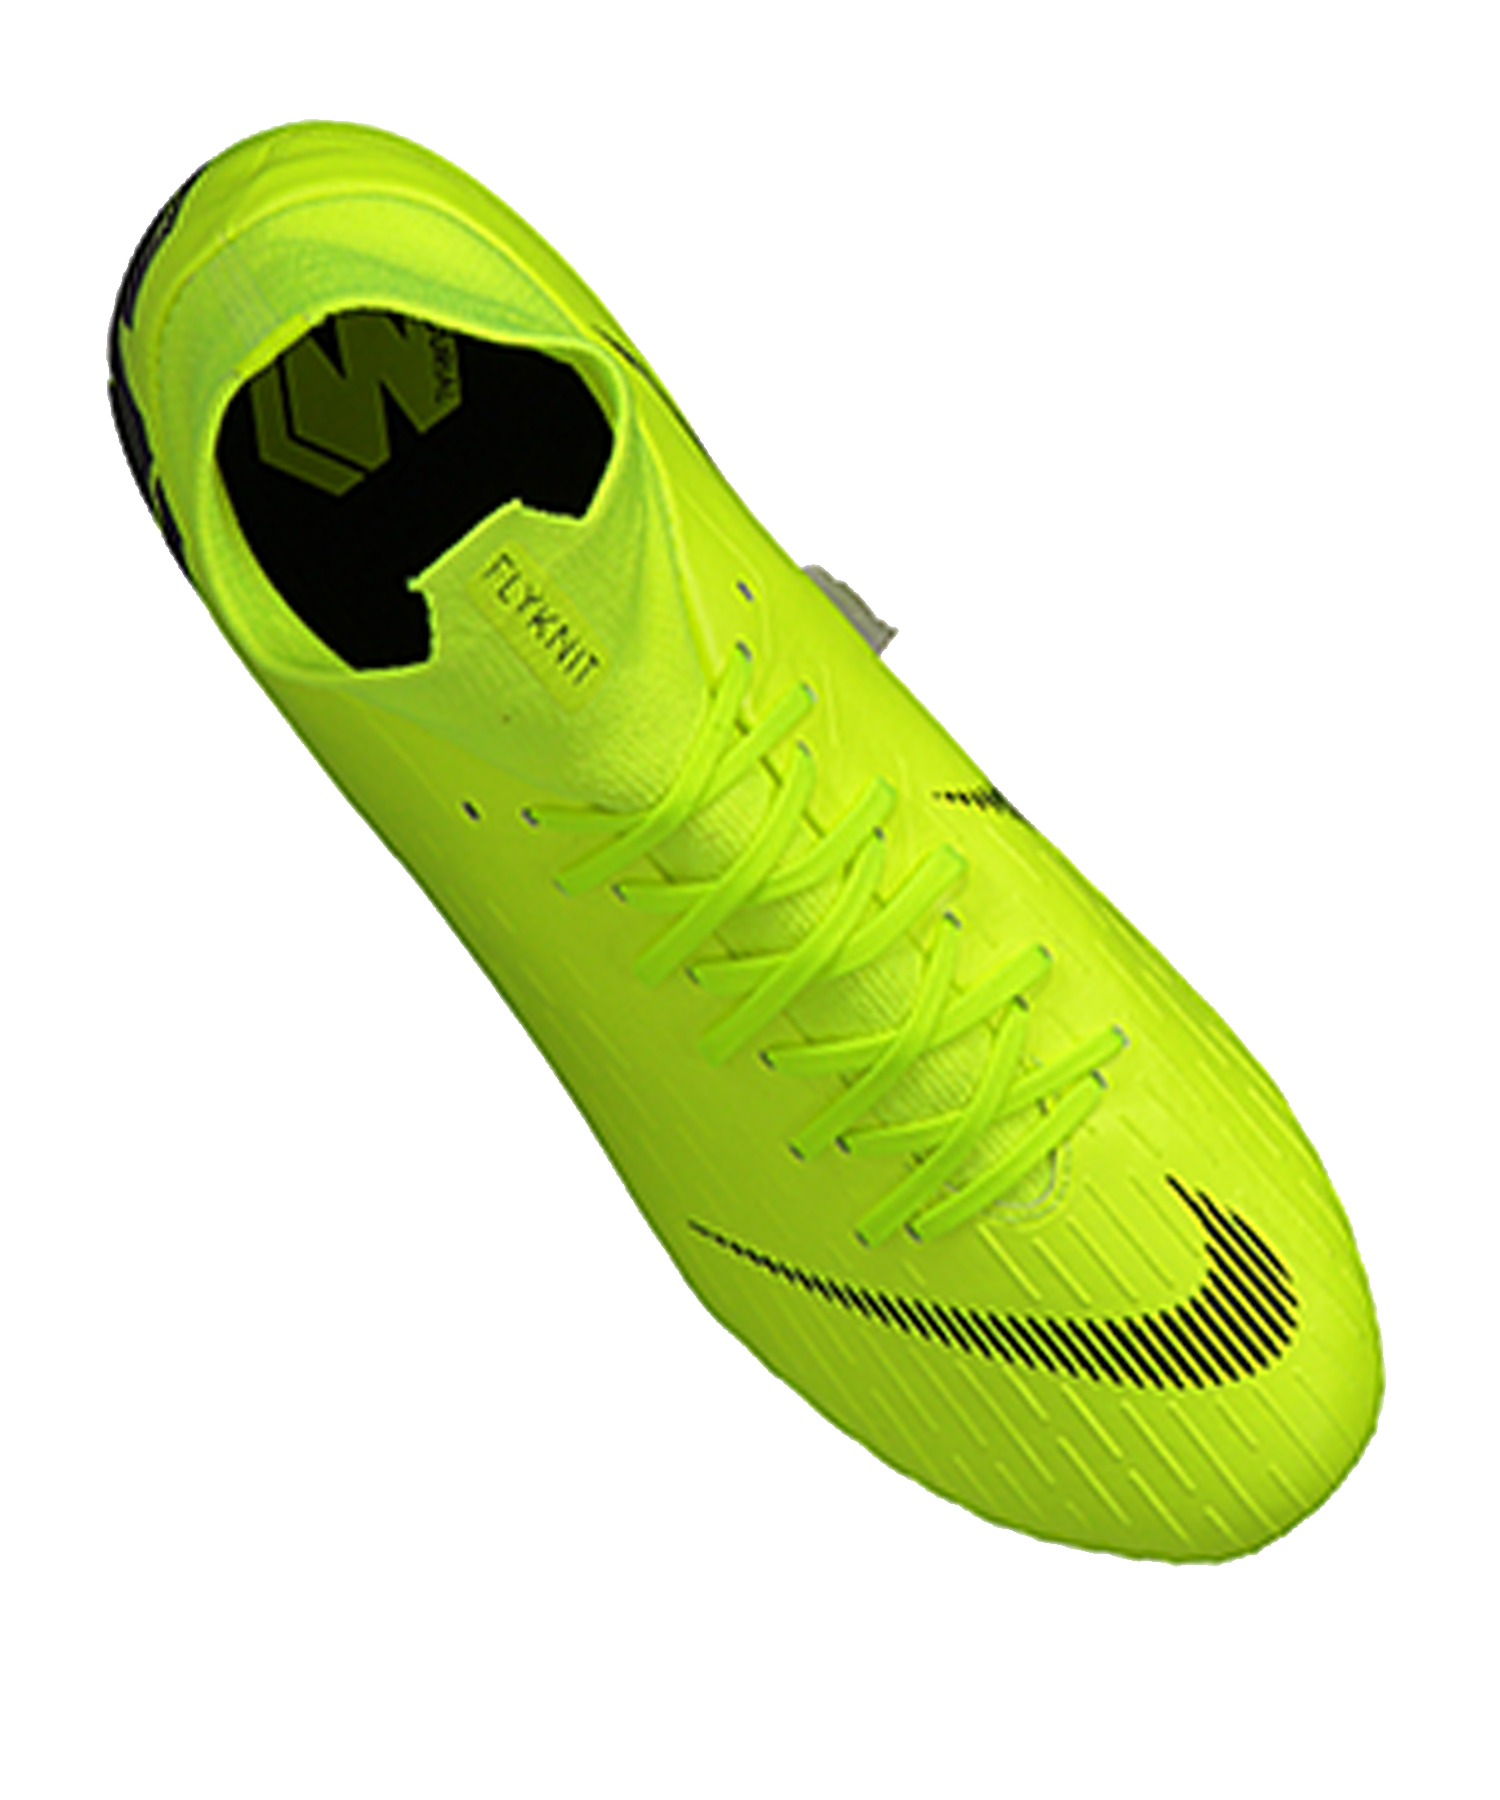 Nike Mercurial Superfly 6 Elite FG Soccer Cleats Ah7365 701.